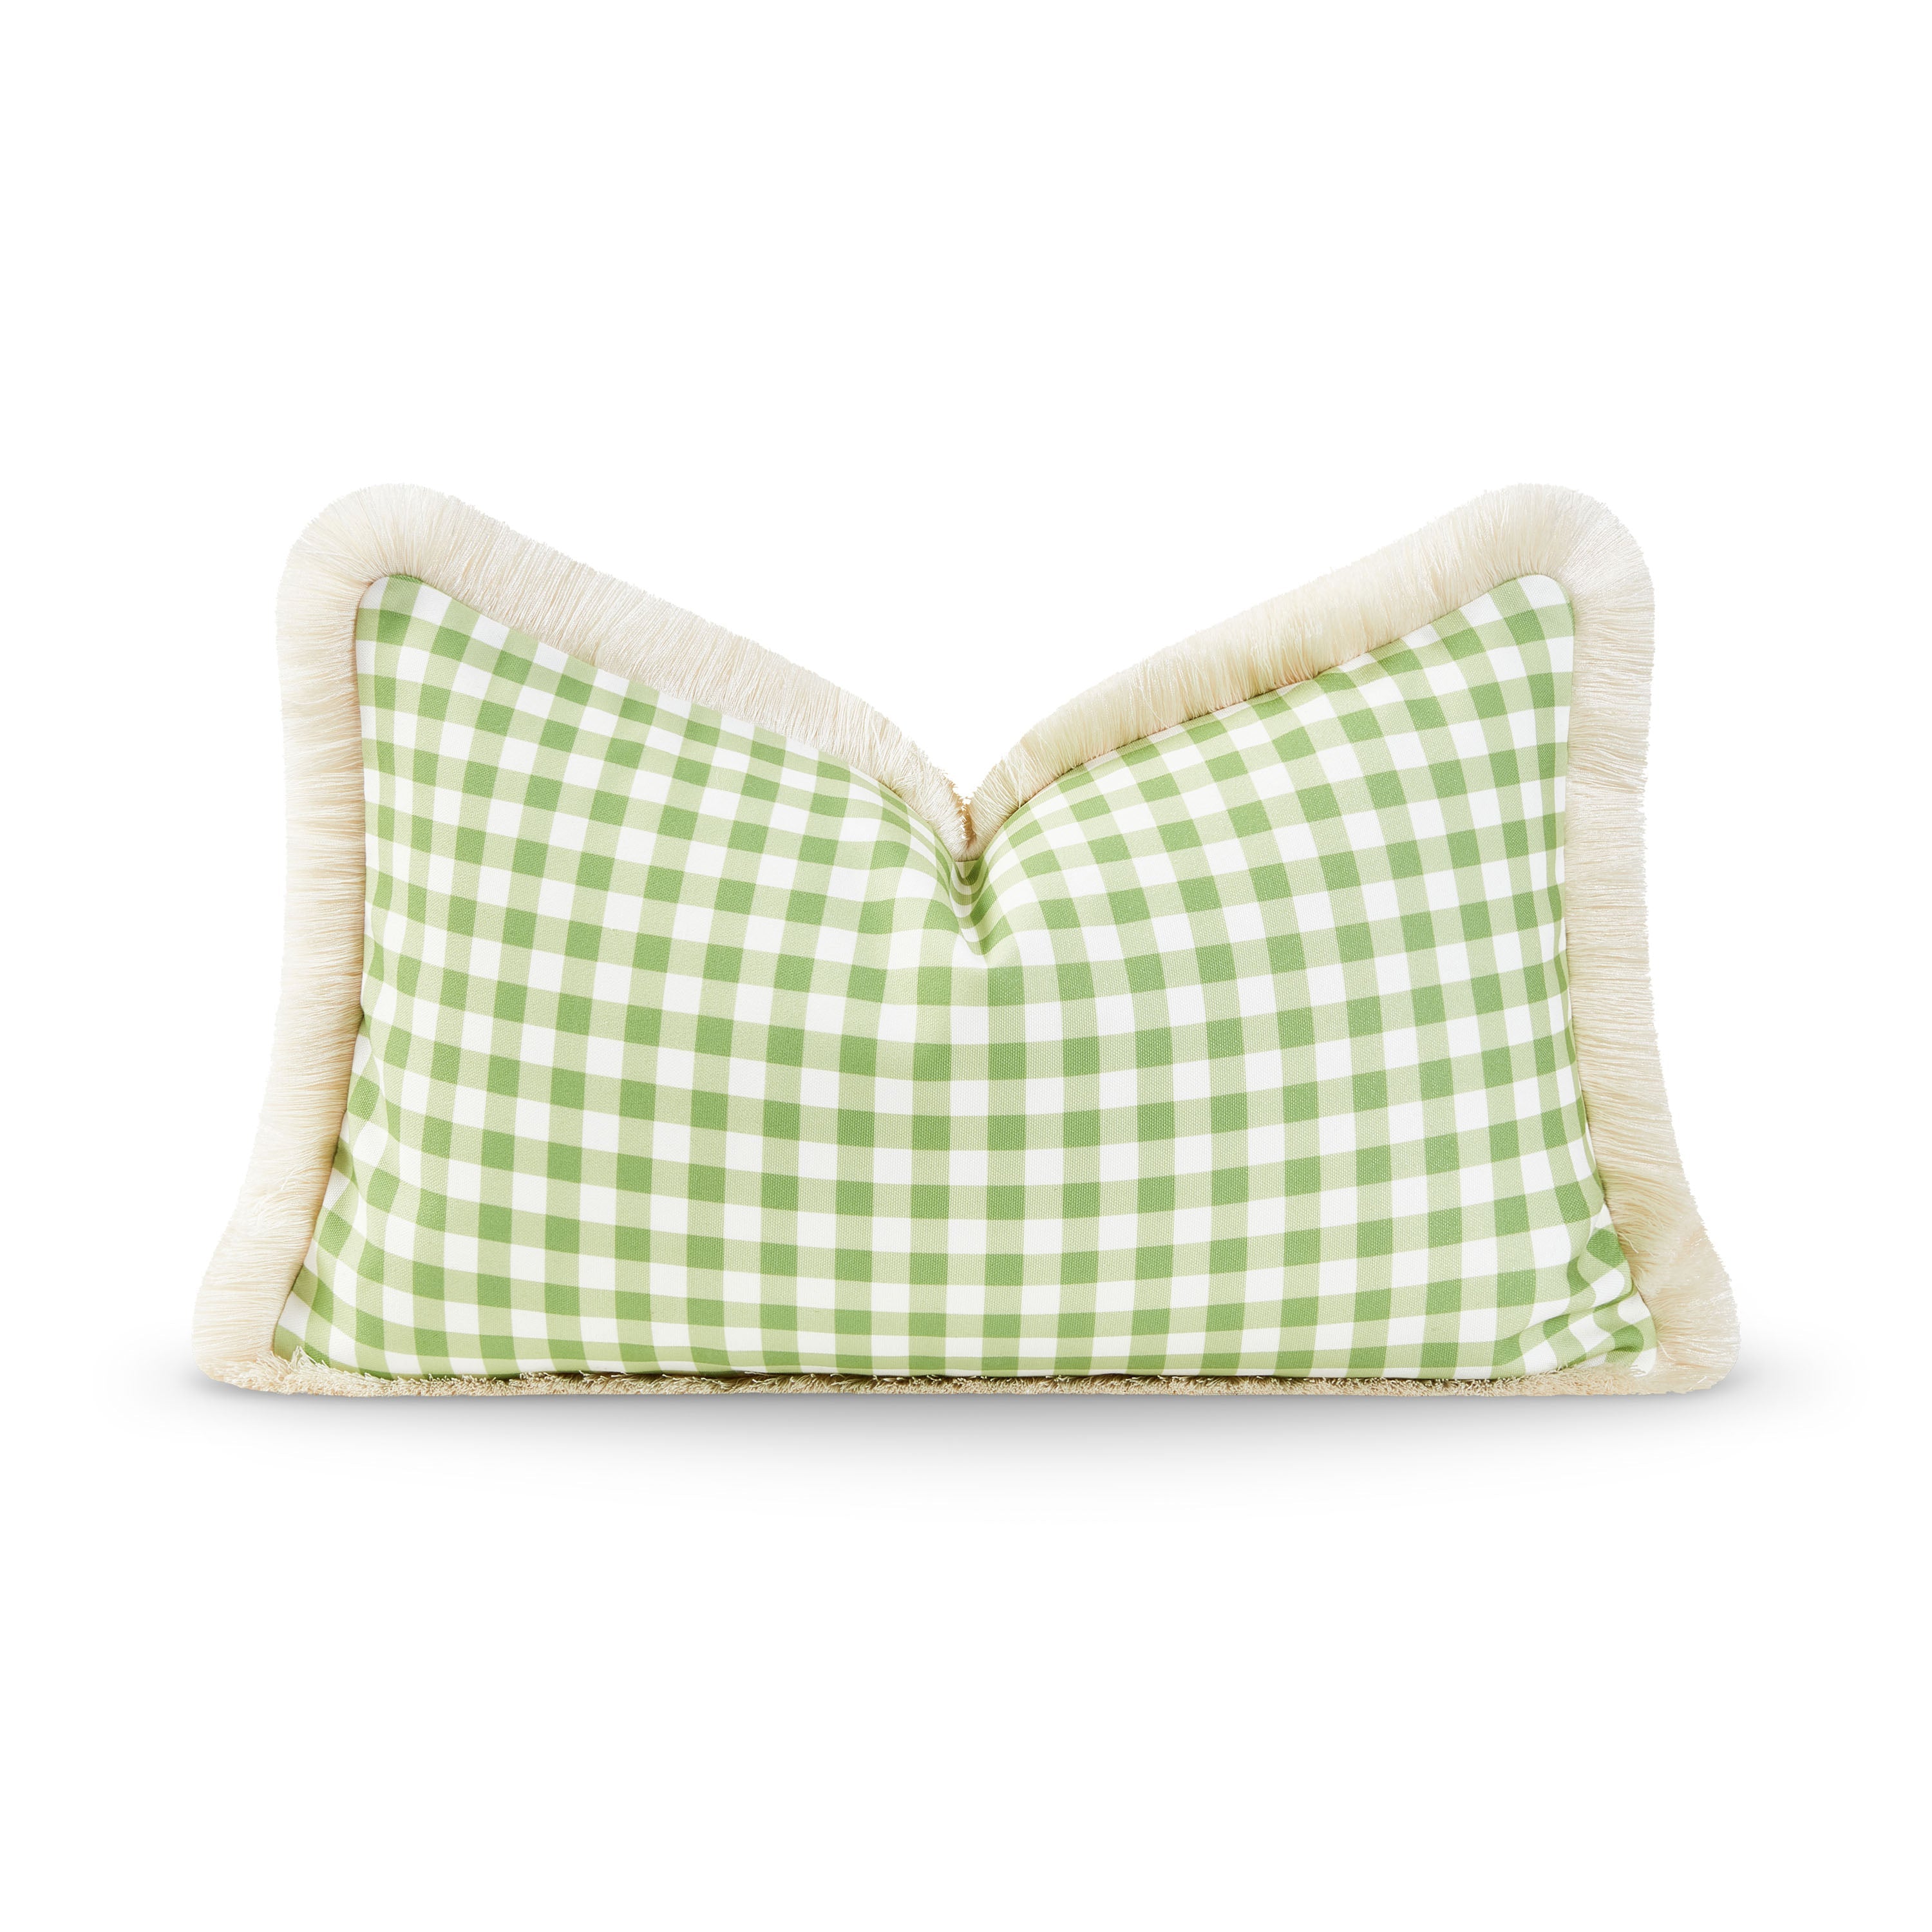 Coastal Indoor Outdoor Lumbar Pillow Cover, Gingham Fringe, Green, 12"x20"